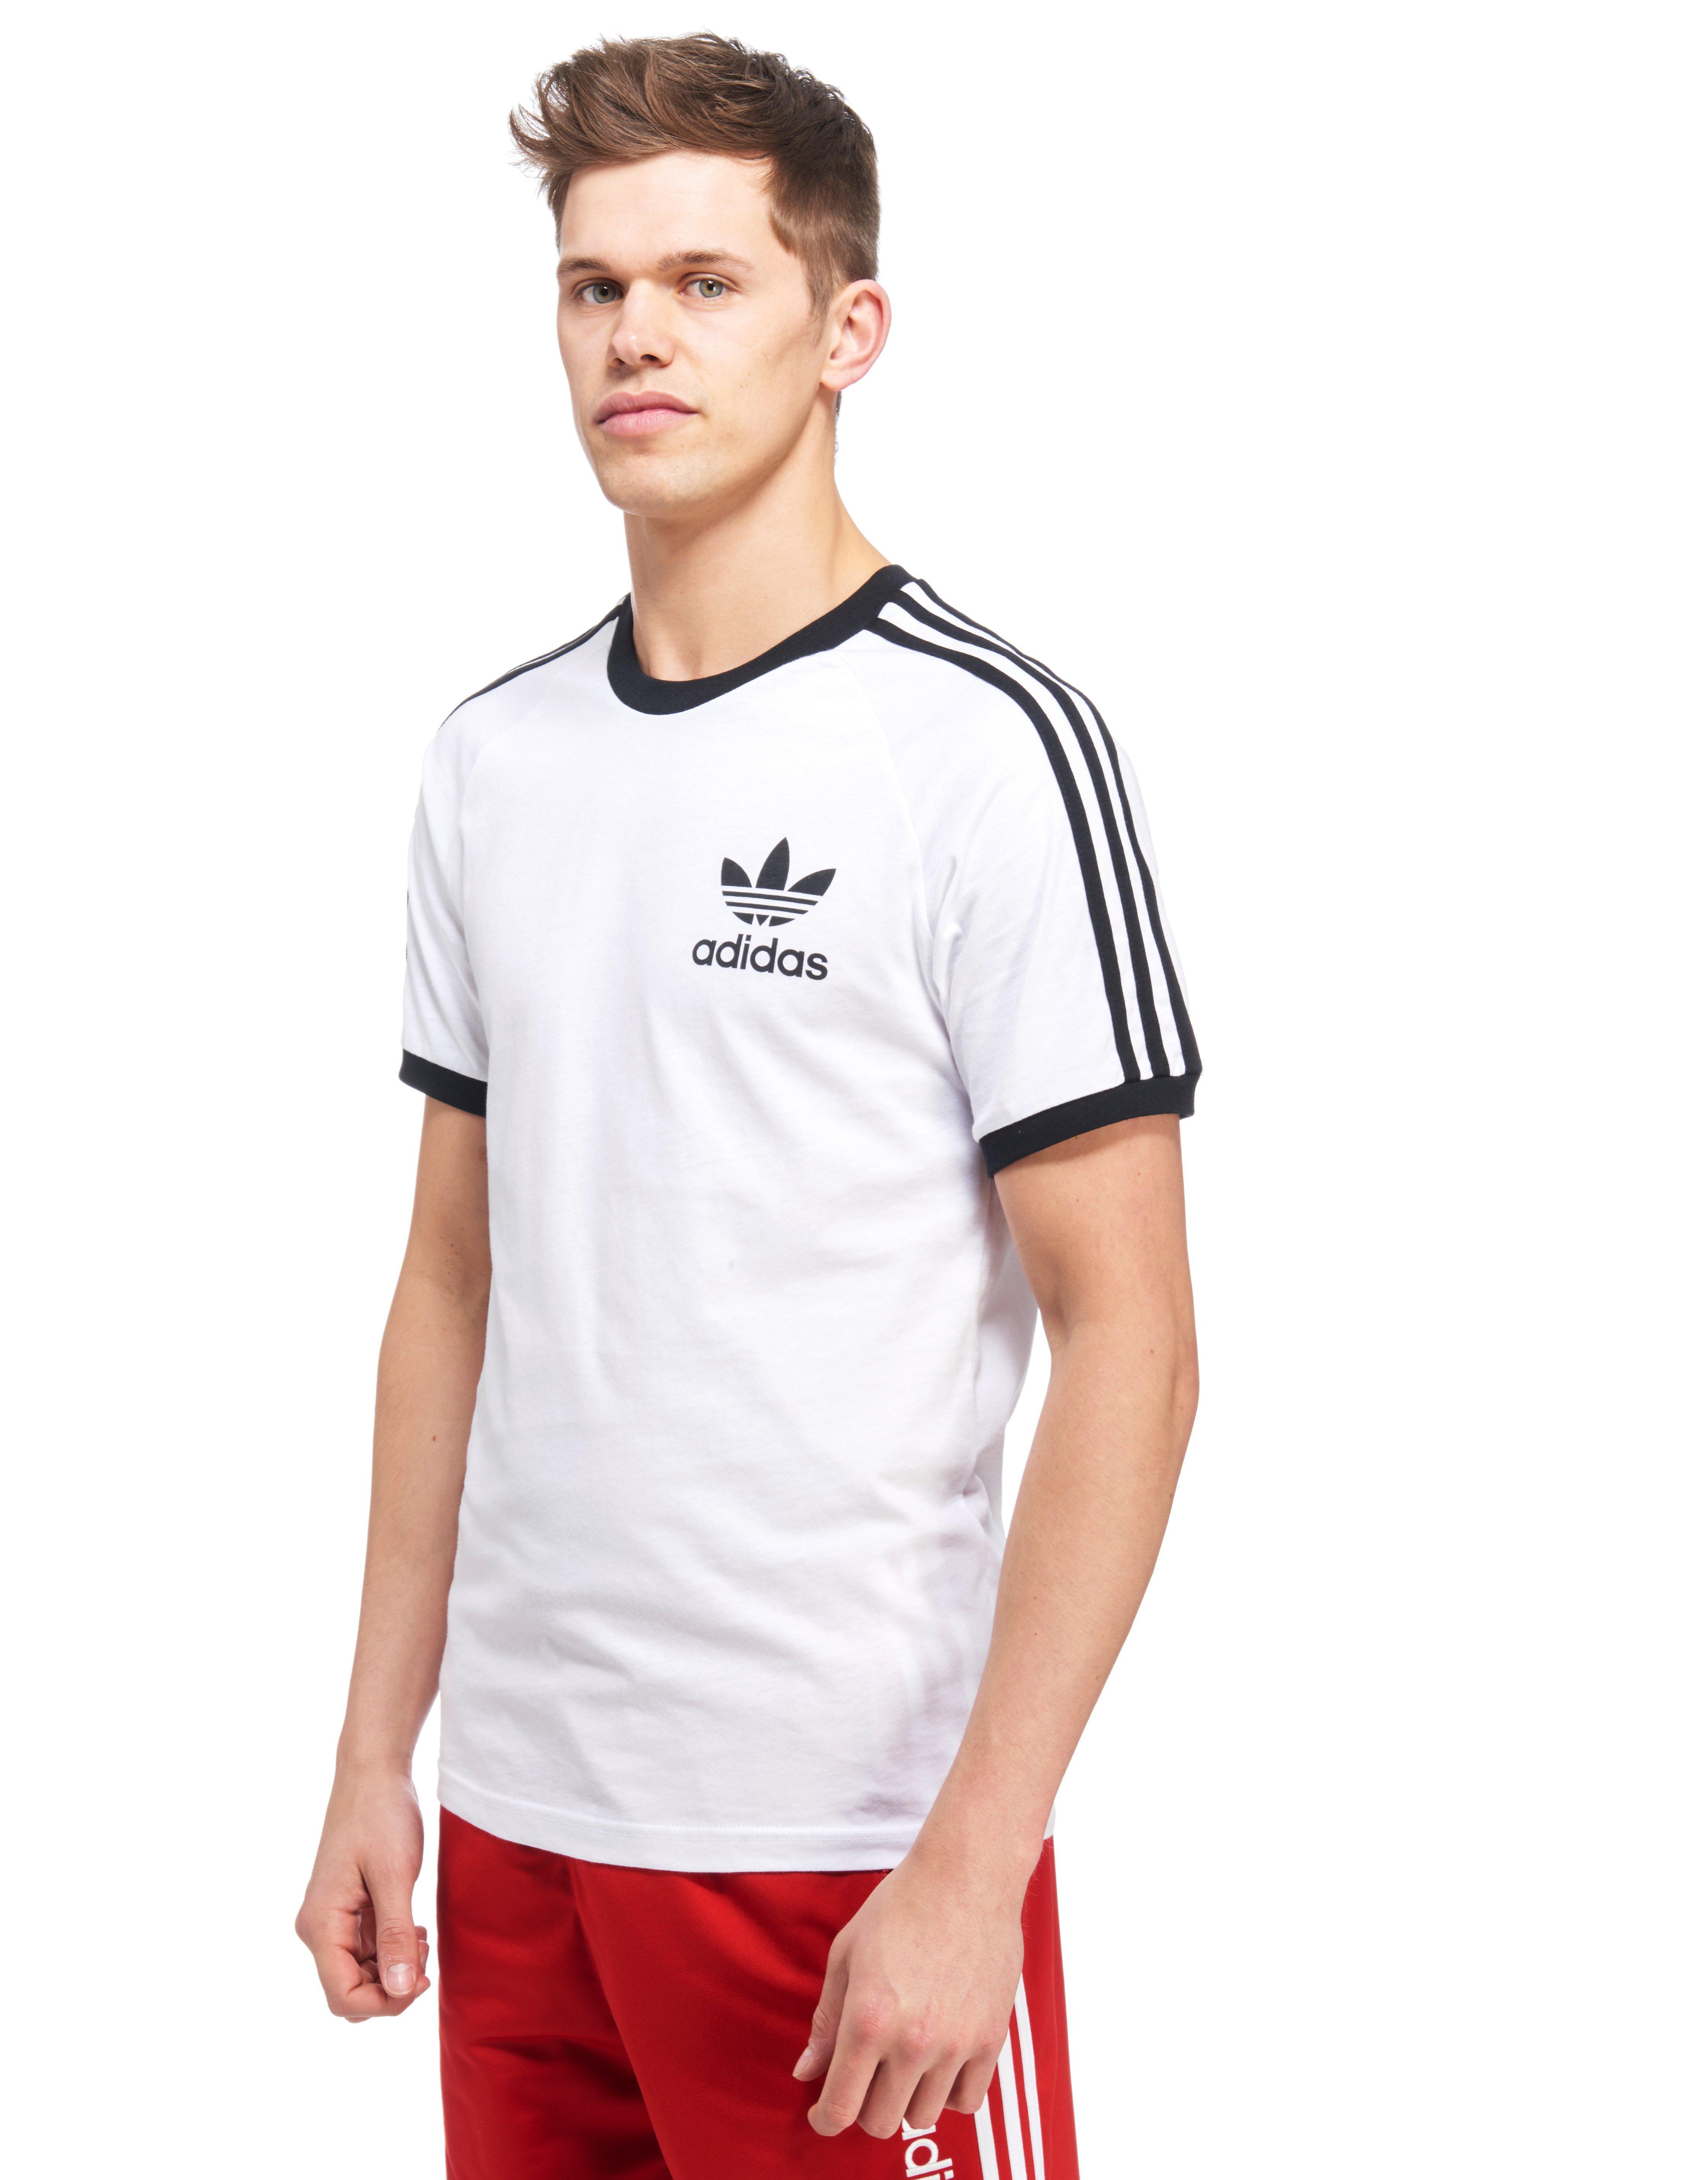 Lyst - Adidas Originals California Short Sleeve T-shirt in White for Men